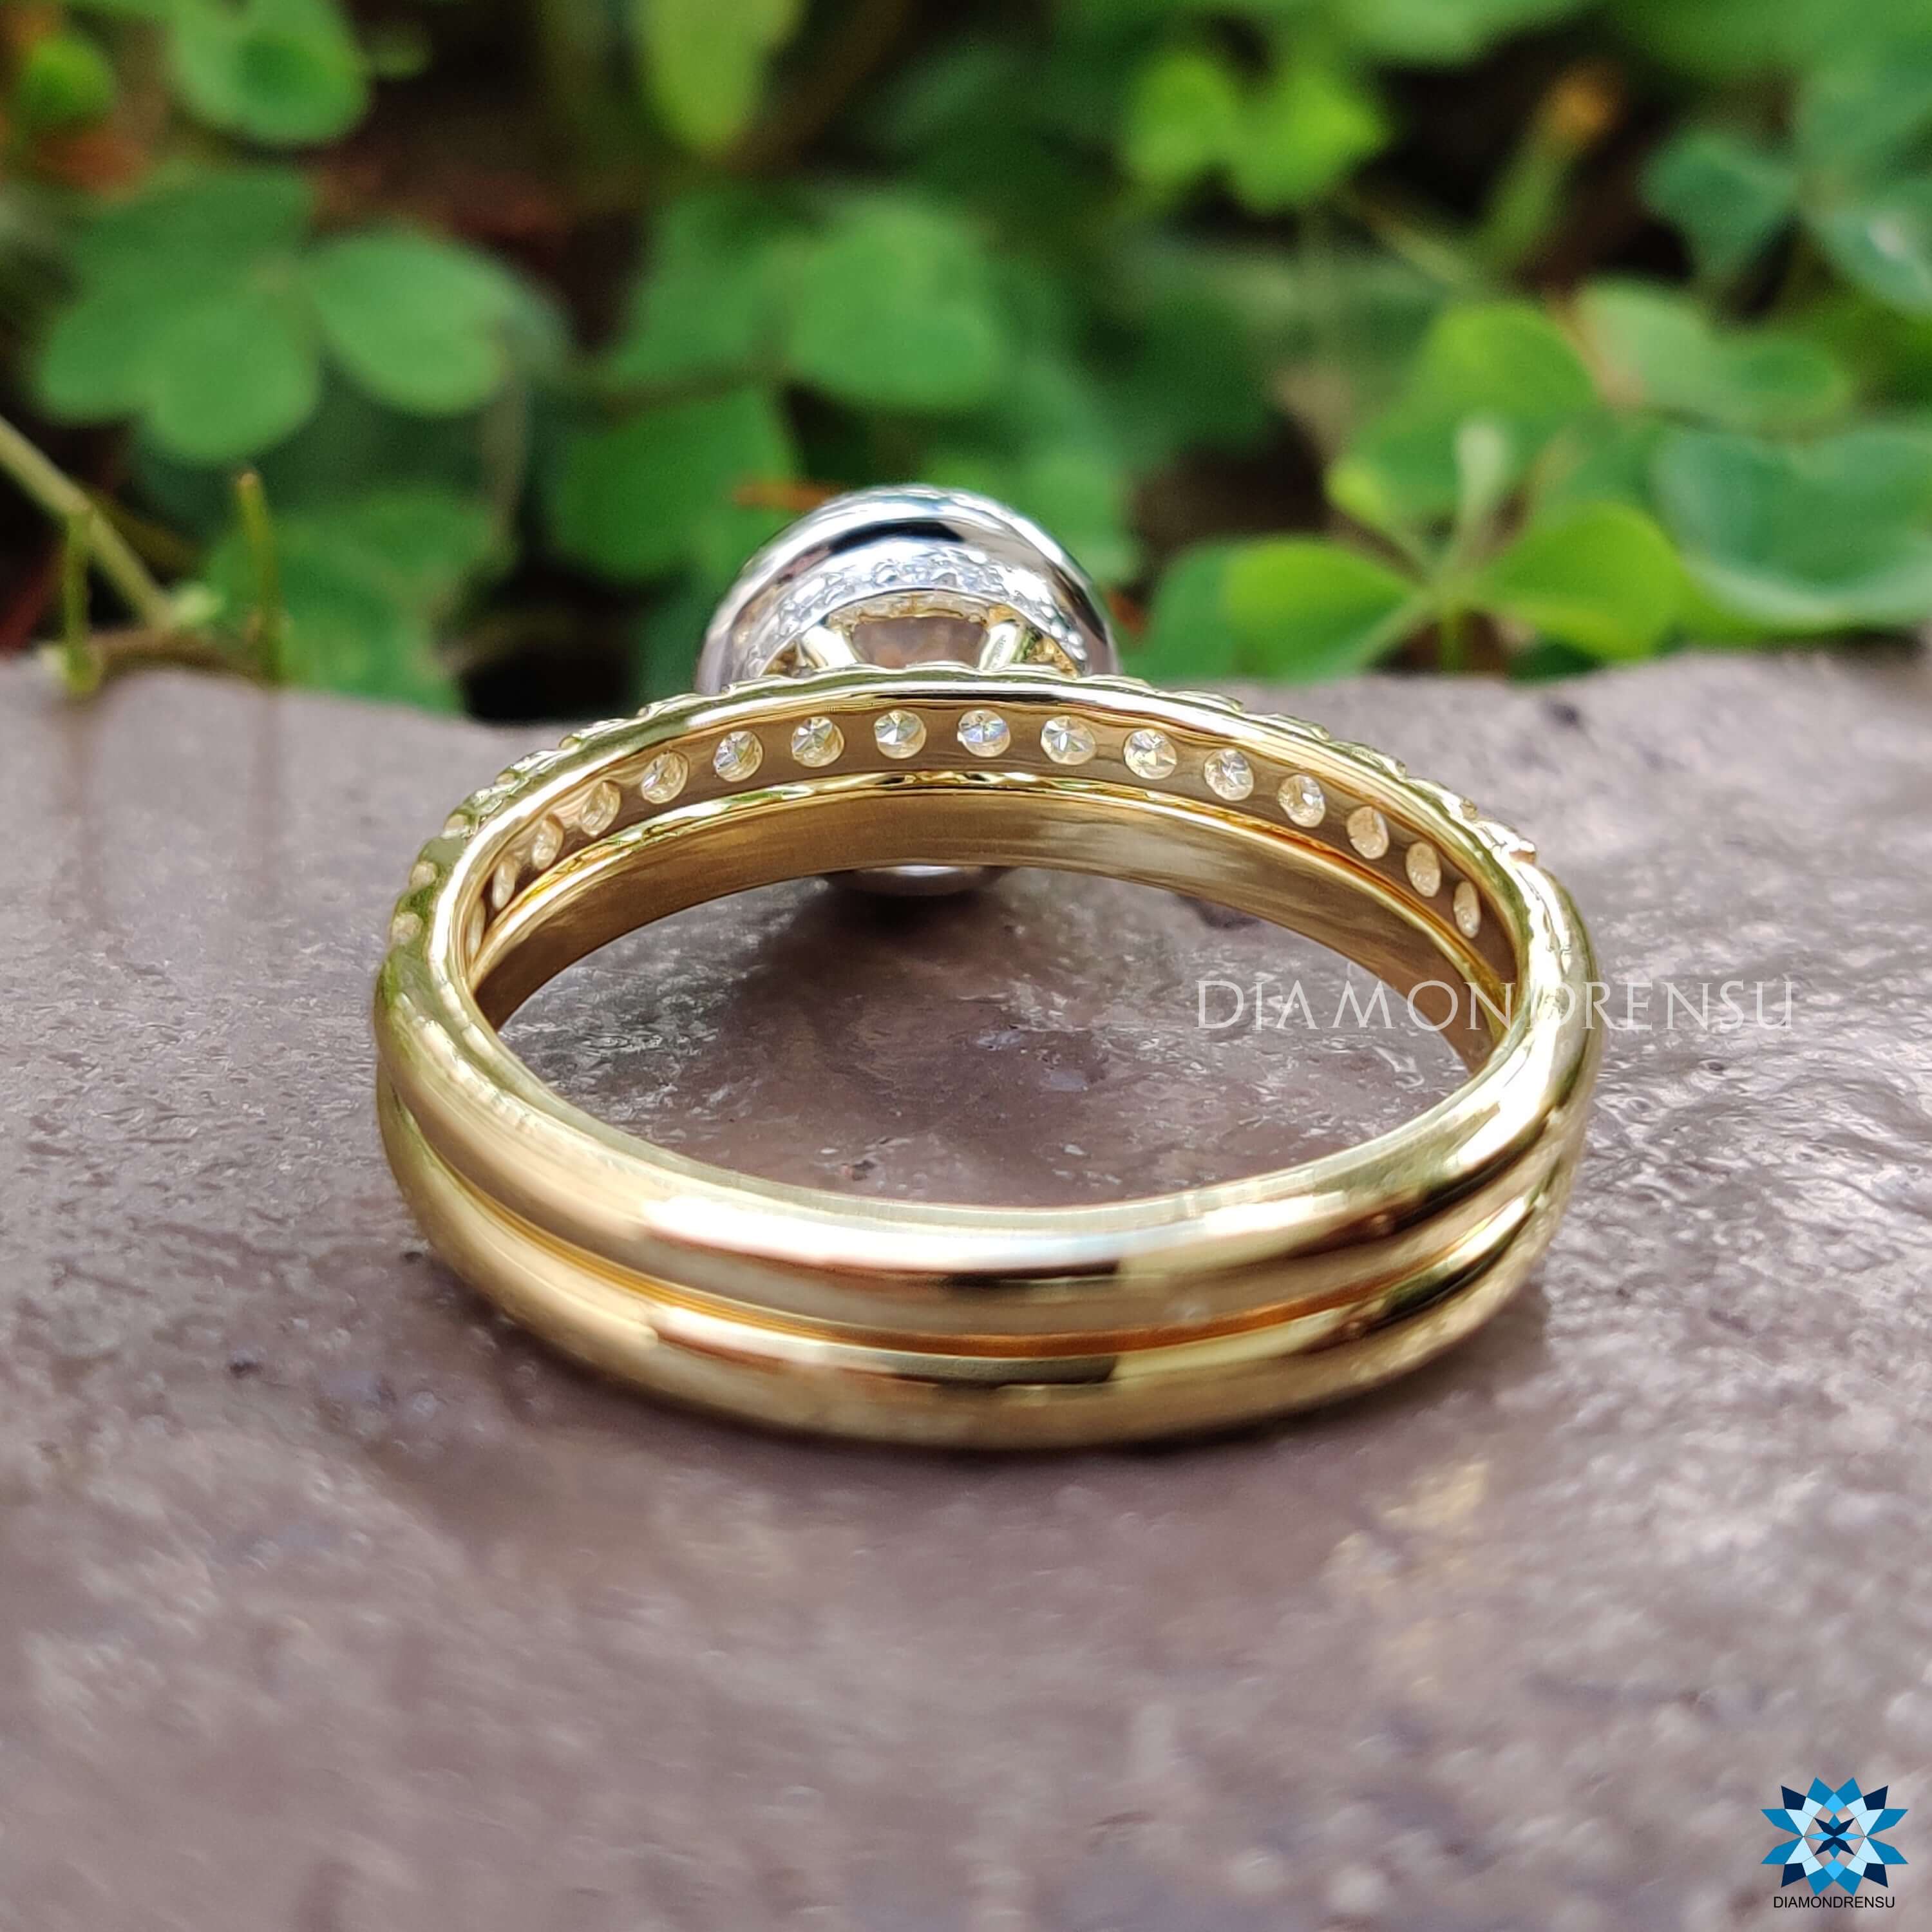 yellow gold wedding ring - diamondrensu